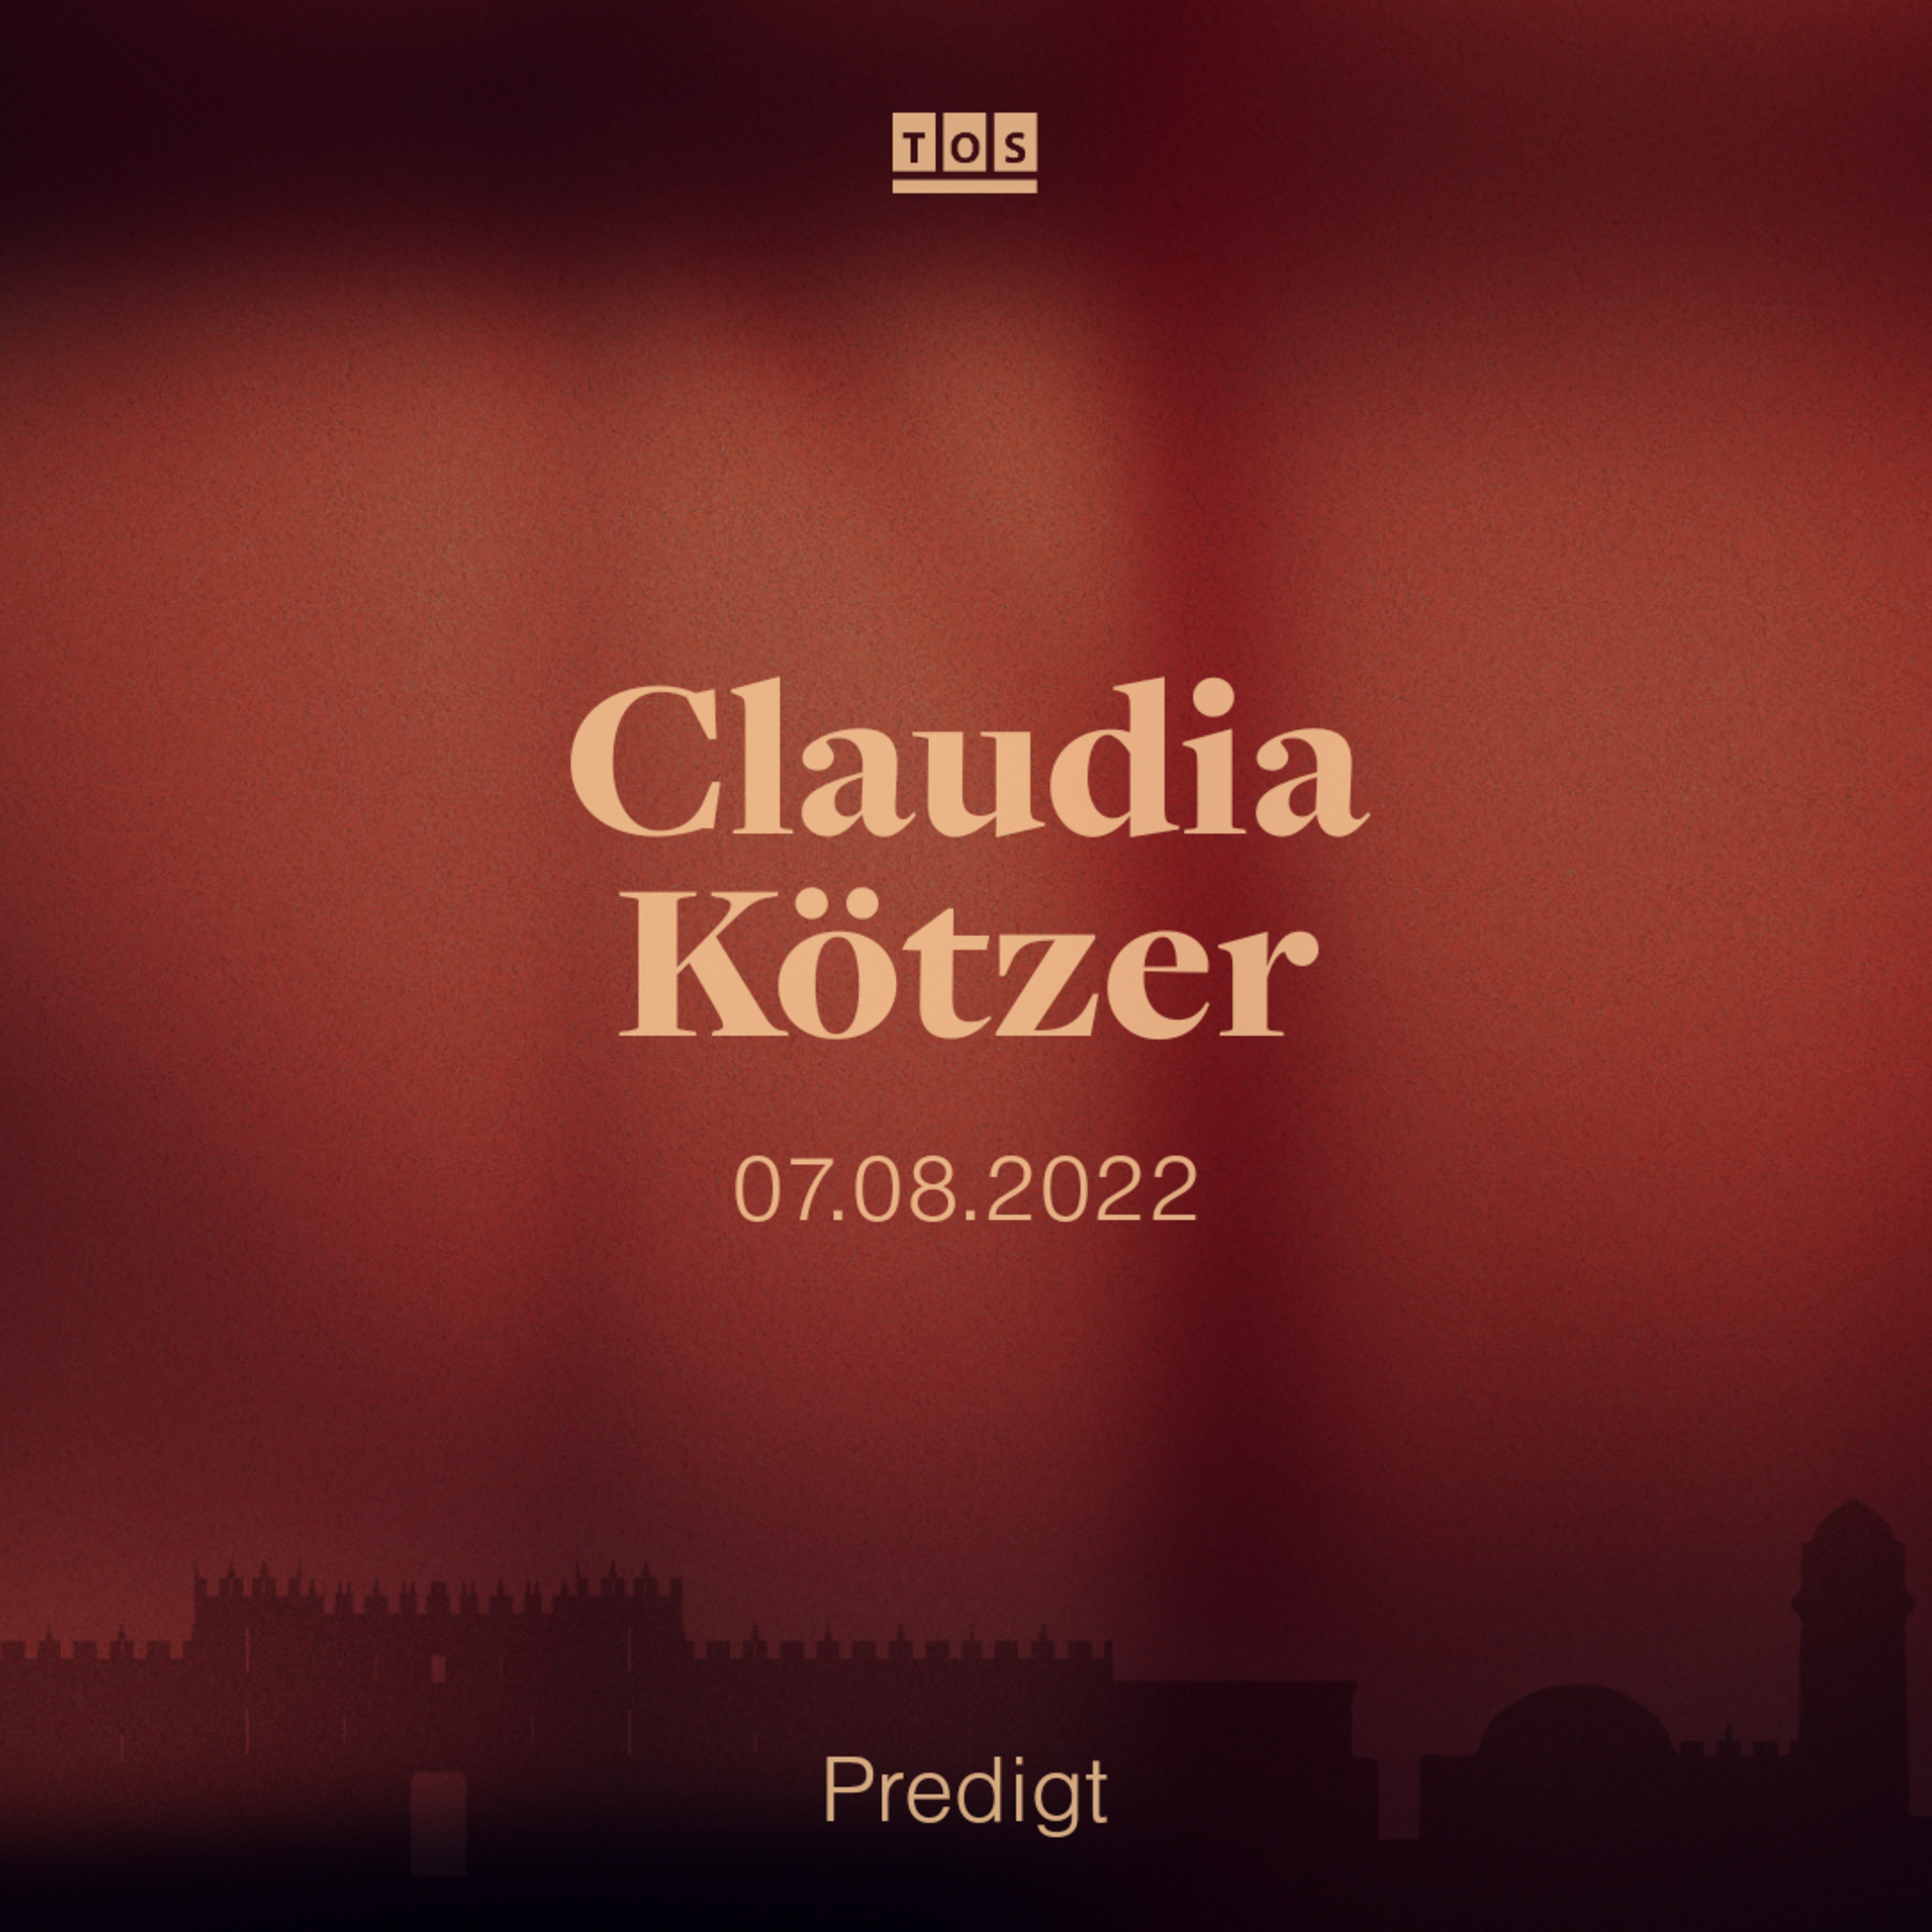 Claudia Kötzer - 07.08.2022 hero artwork